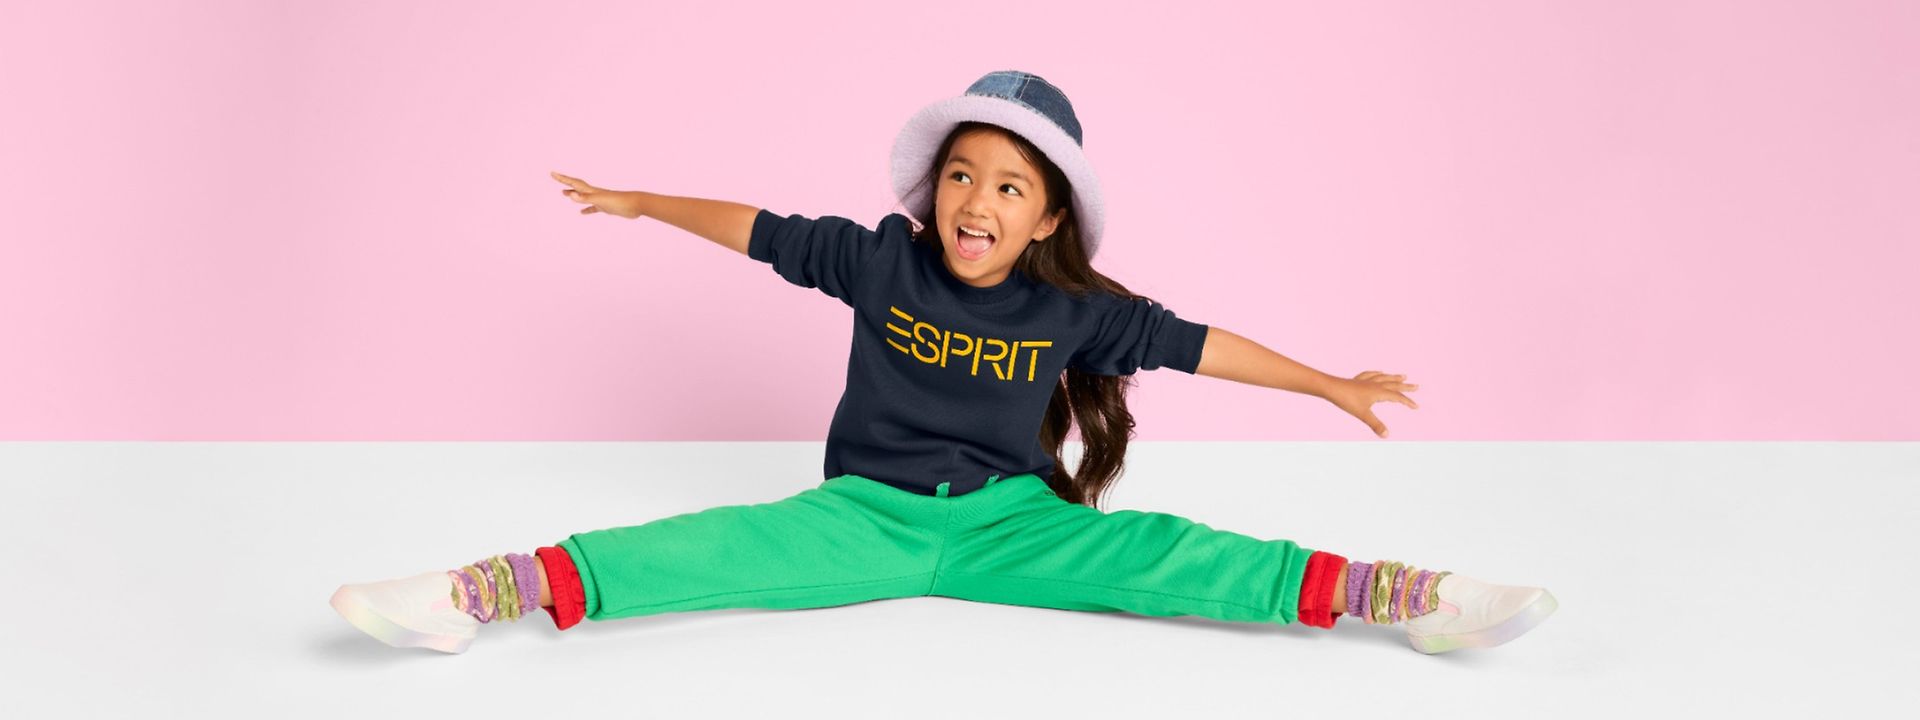 ESPRIT - Semi-opaque capri leggings at our online shop